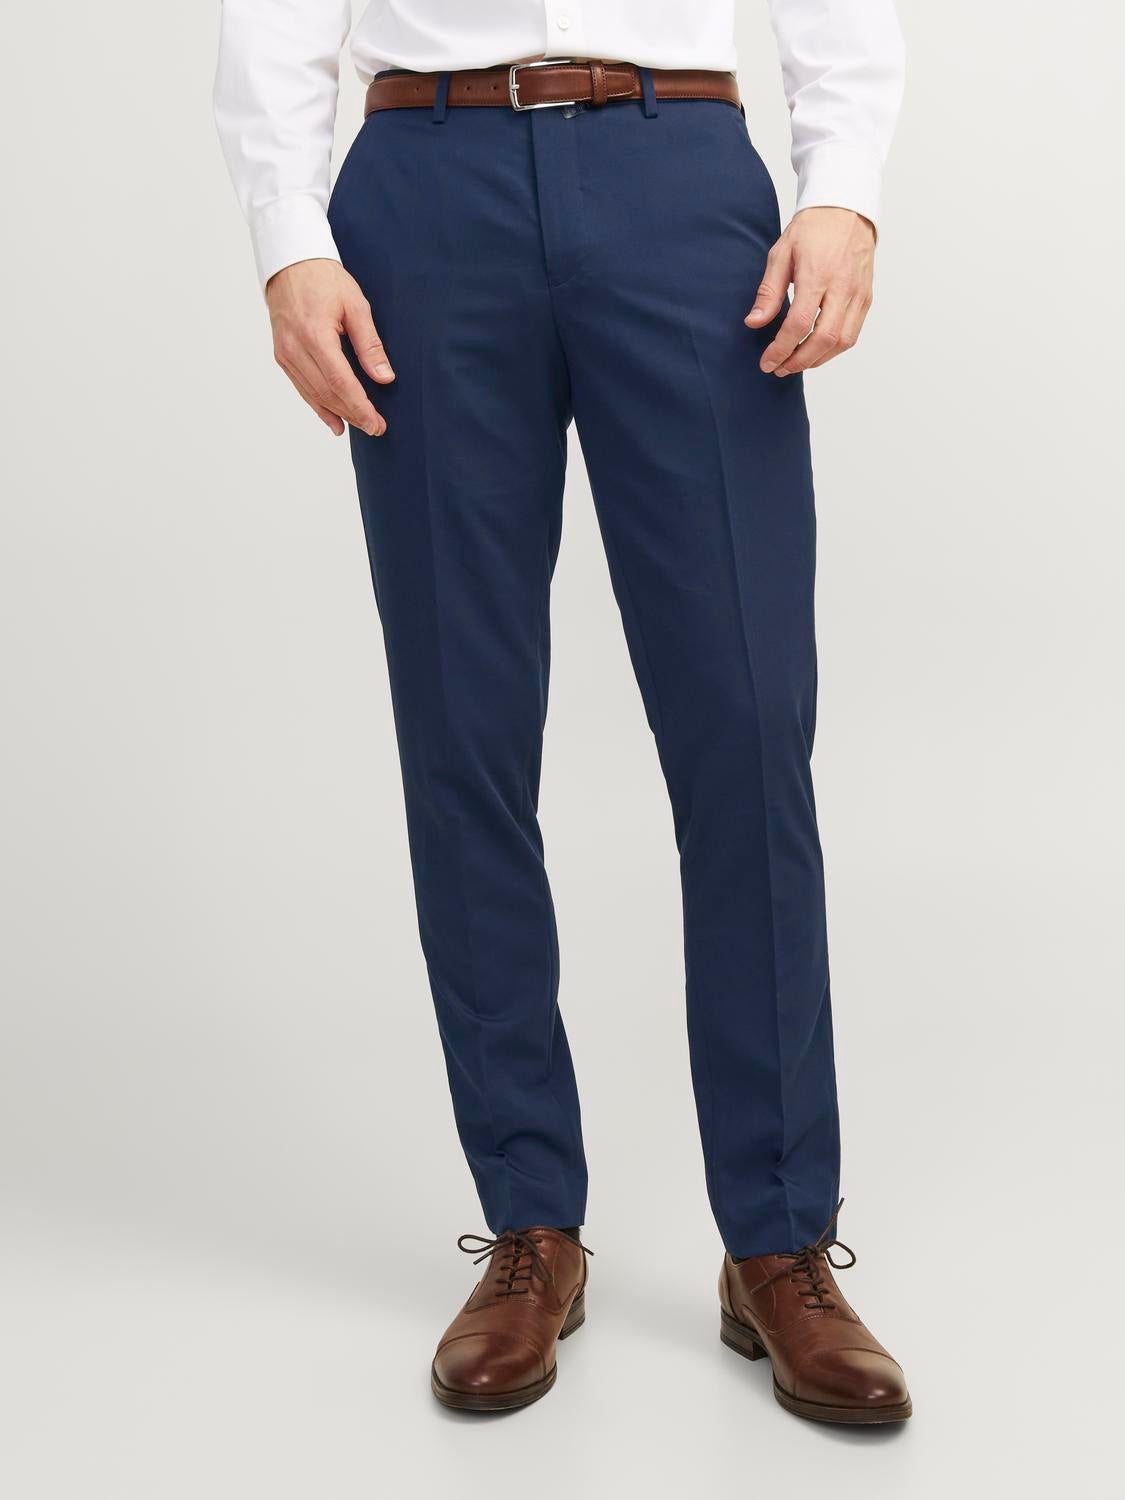 Acne Studios Blue Stan Slim Fit Corduroy Suit Trousers, $320 | MR PORTER |  Lookastic